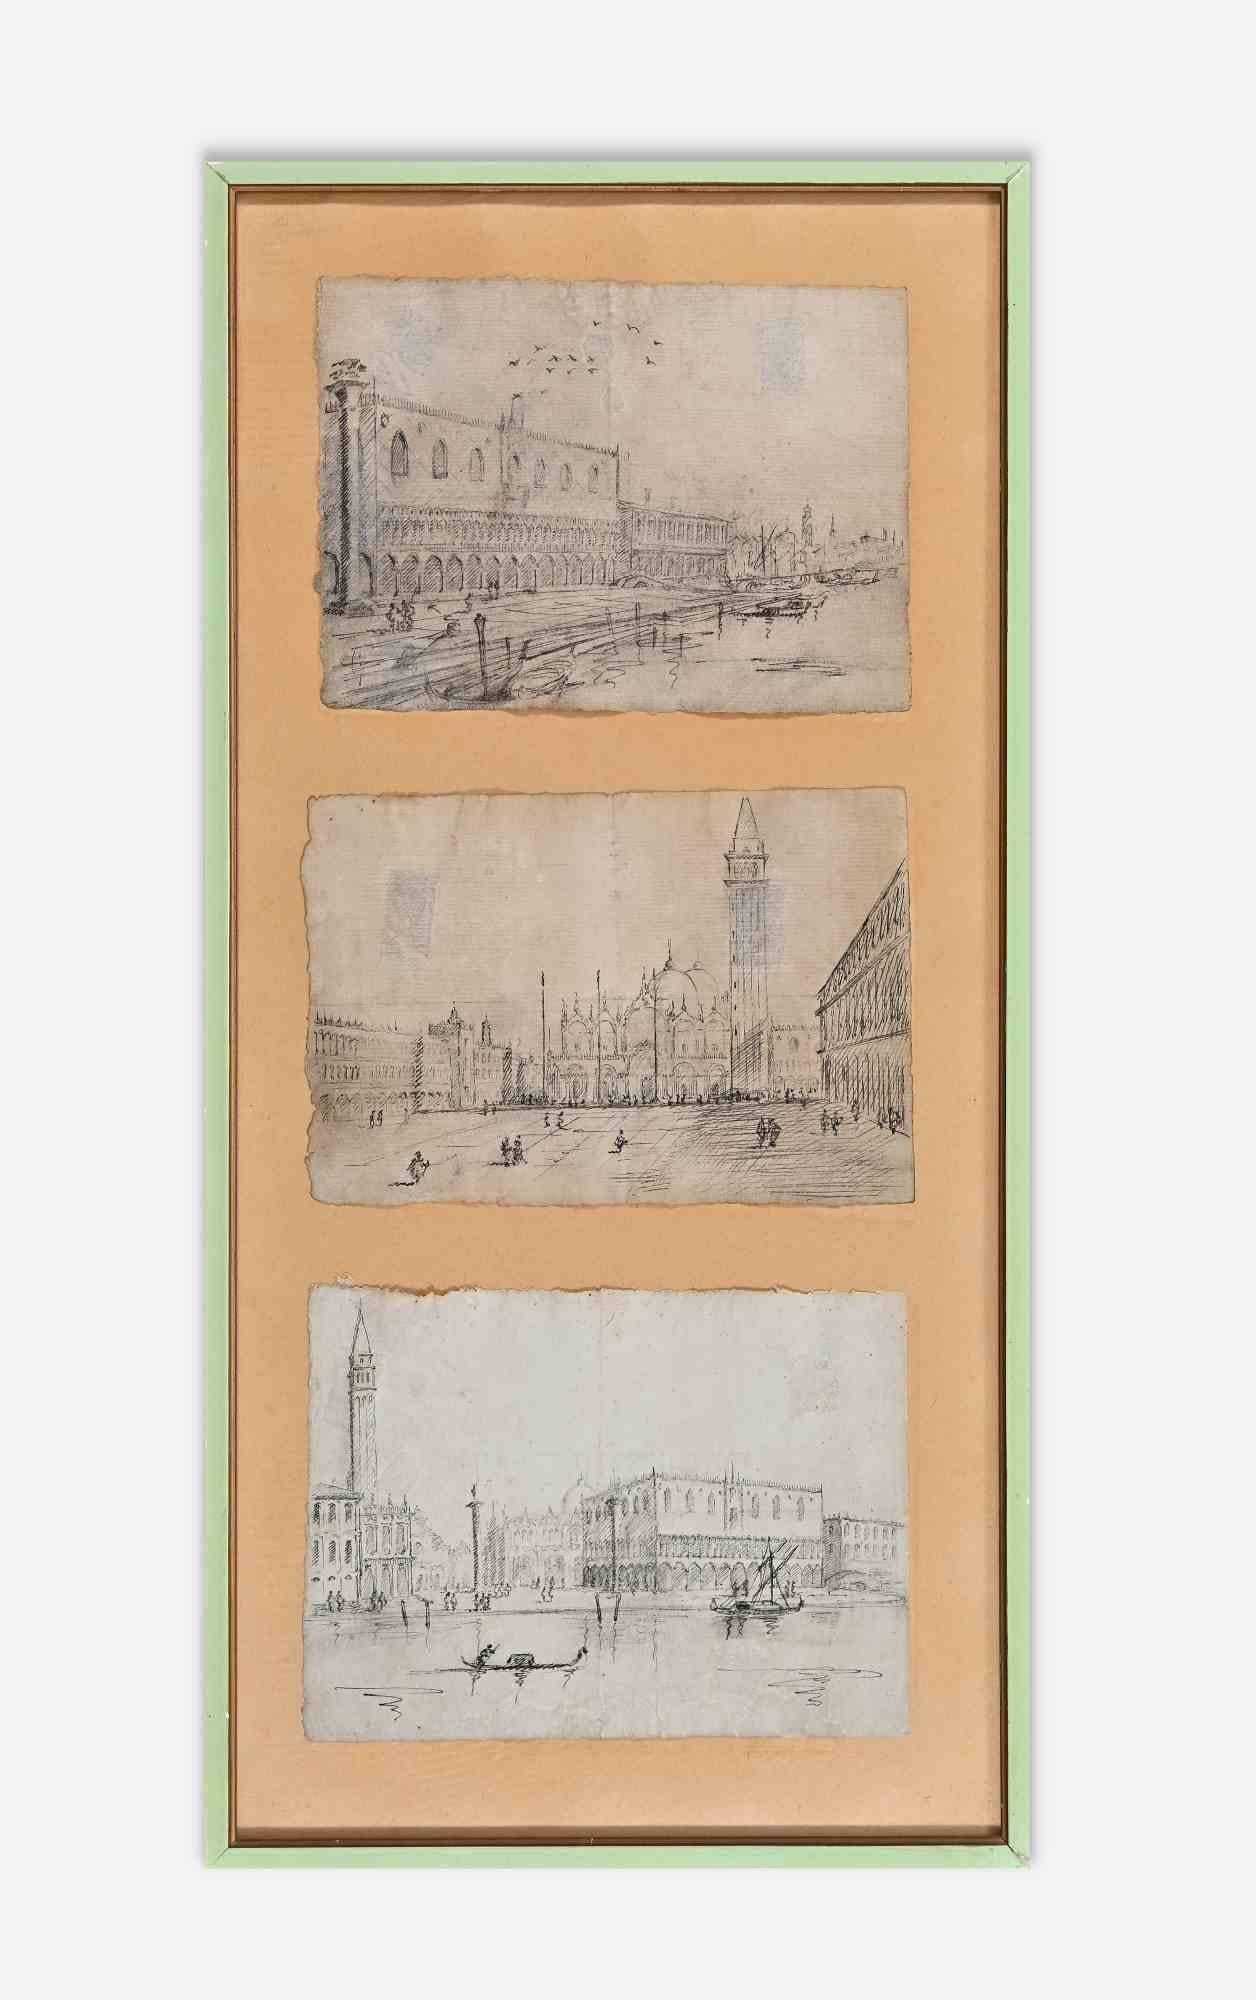 Unknown Landscape Art - Venice Landscapes - Pencil Drawing- 19th Century